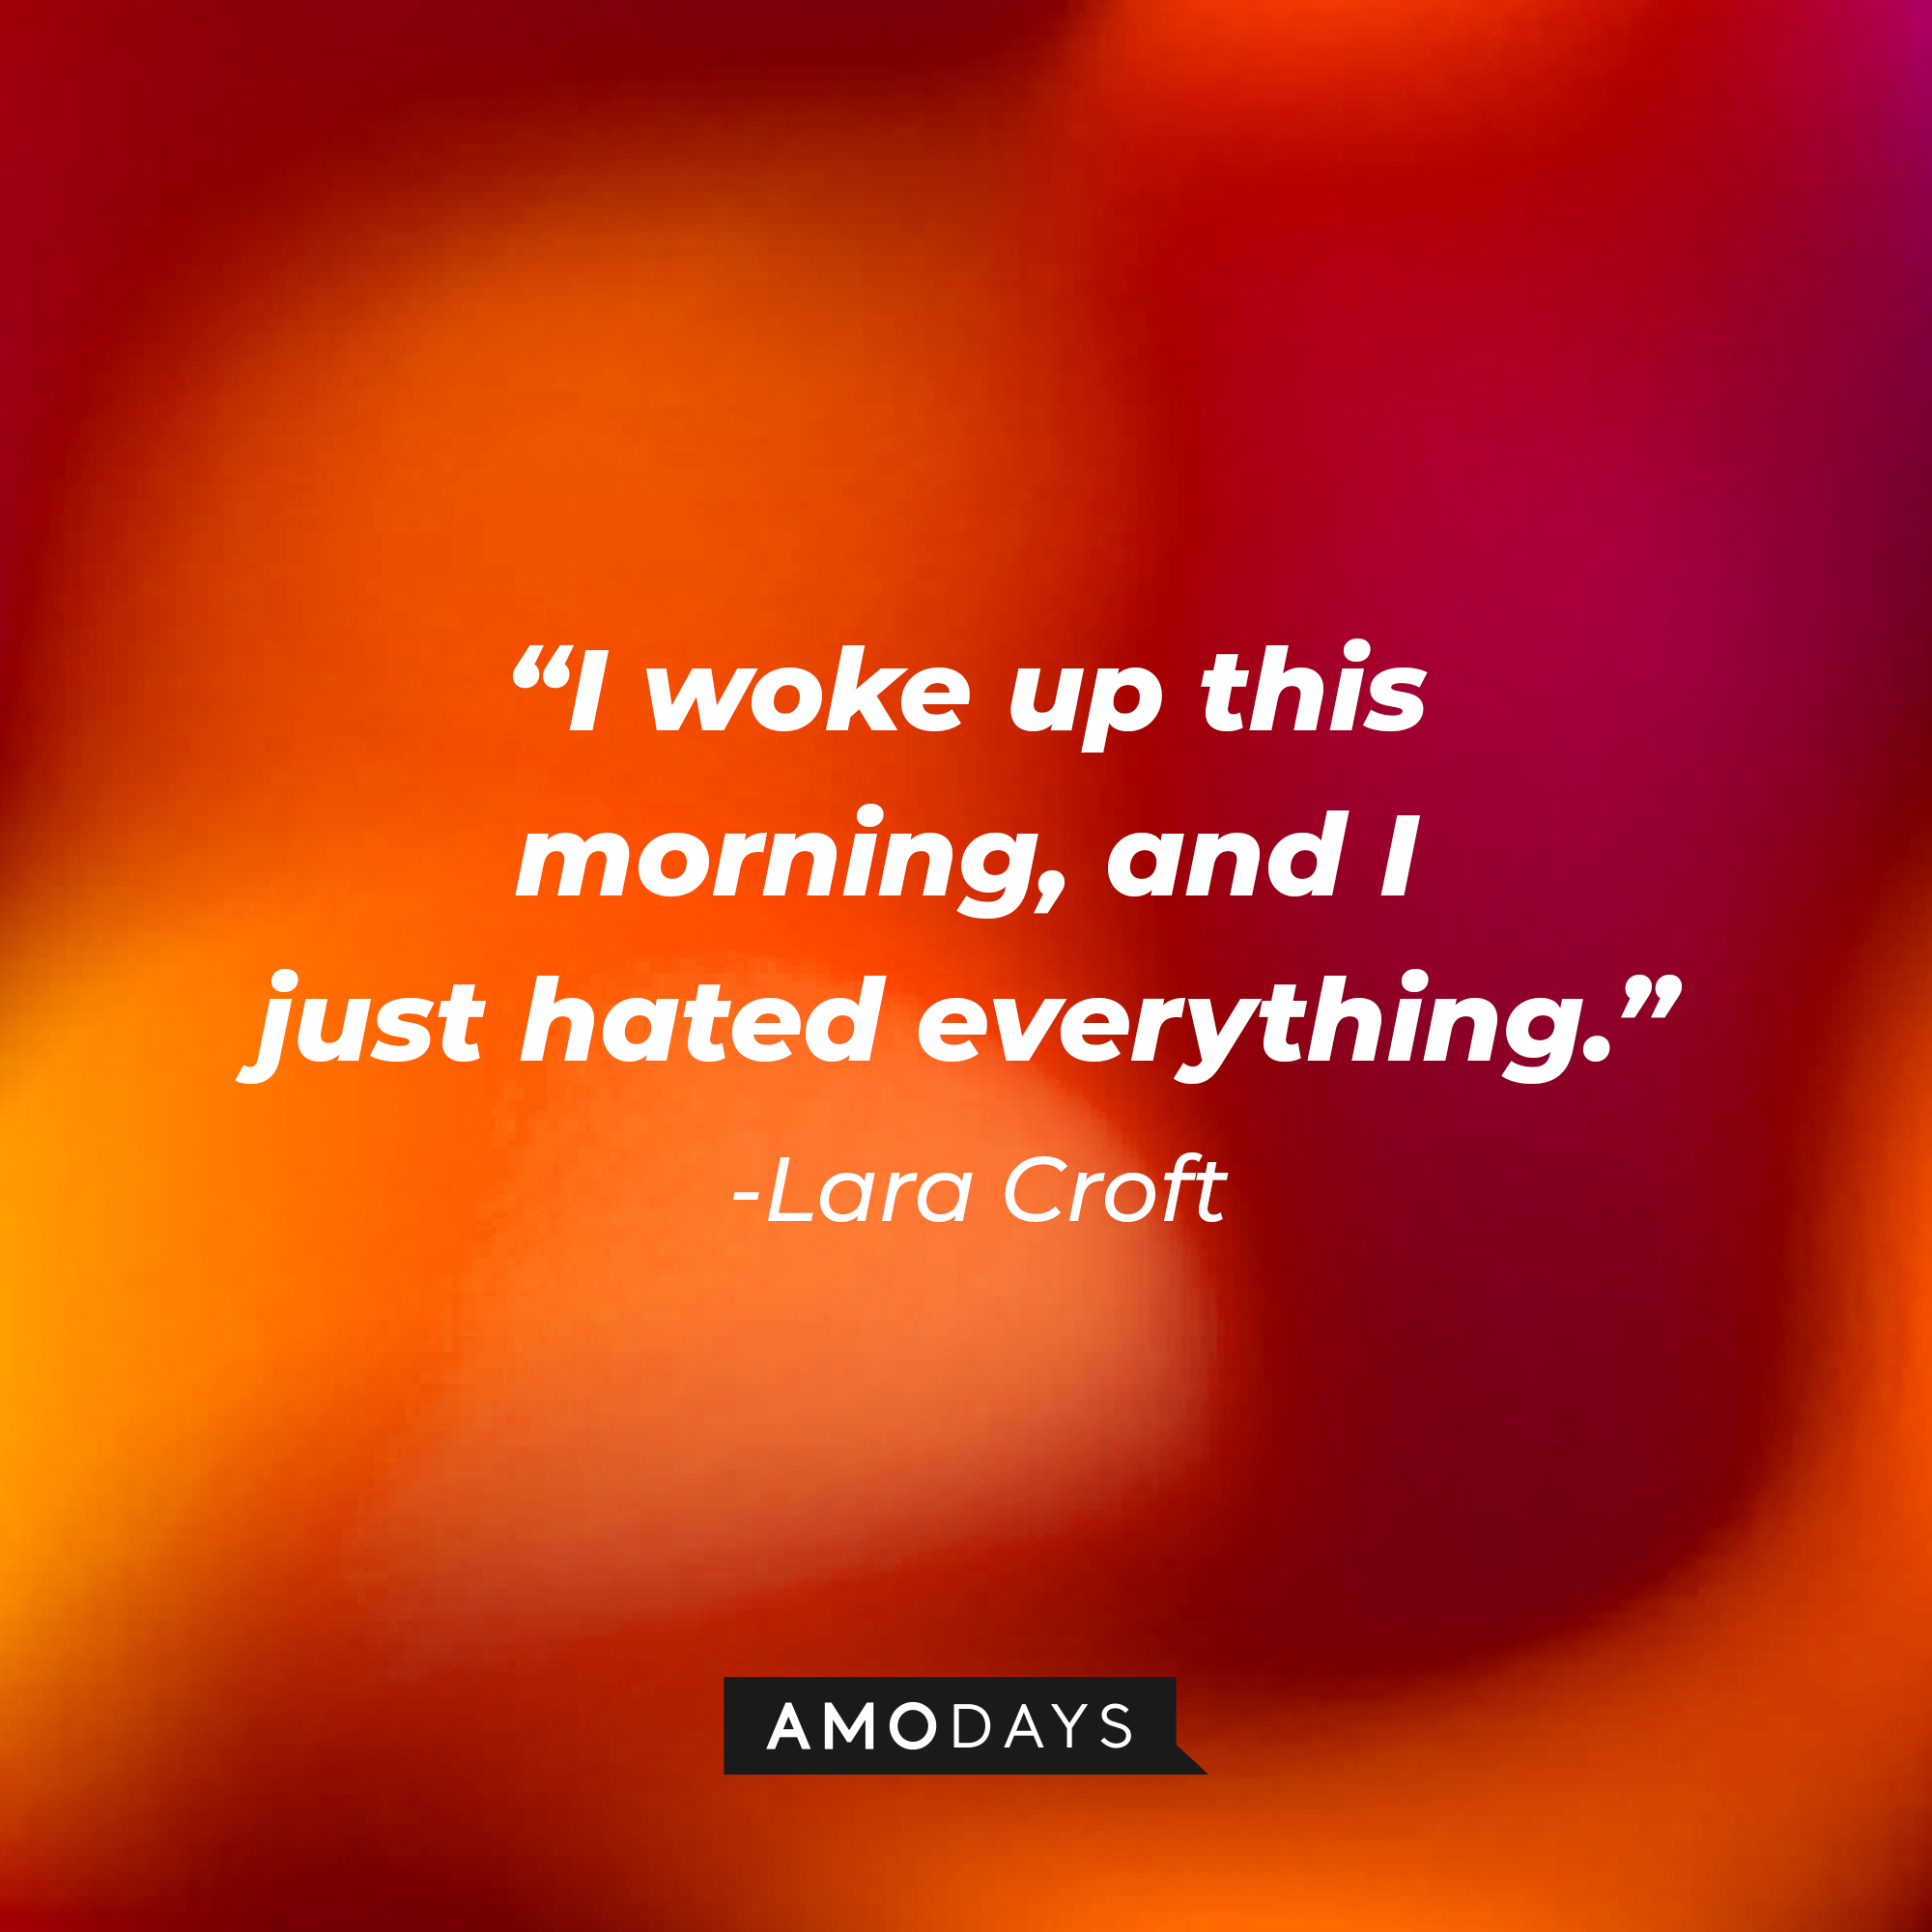 Lara Croft's quote: "I woke up this morning, and I just hated everything." | Source: AmoDays